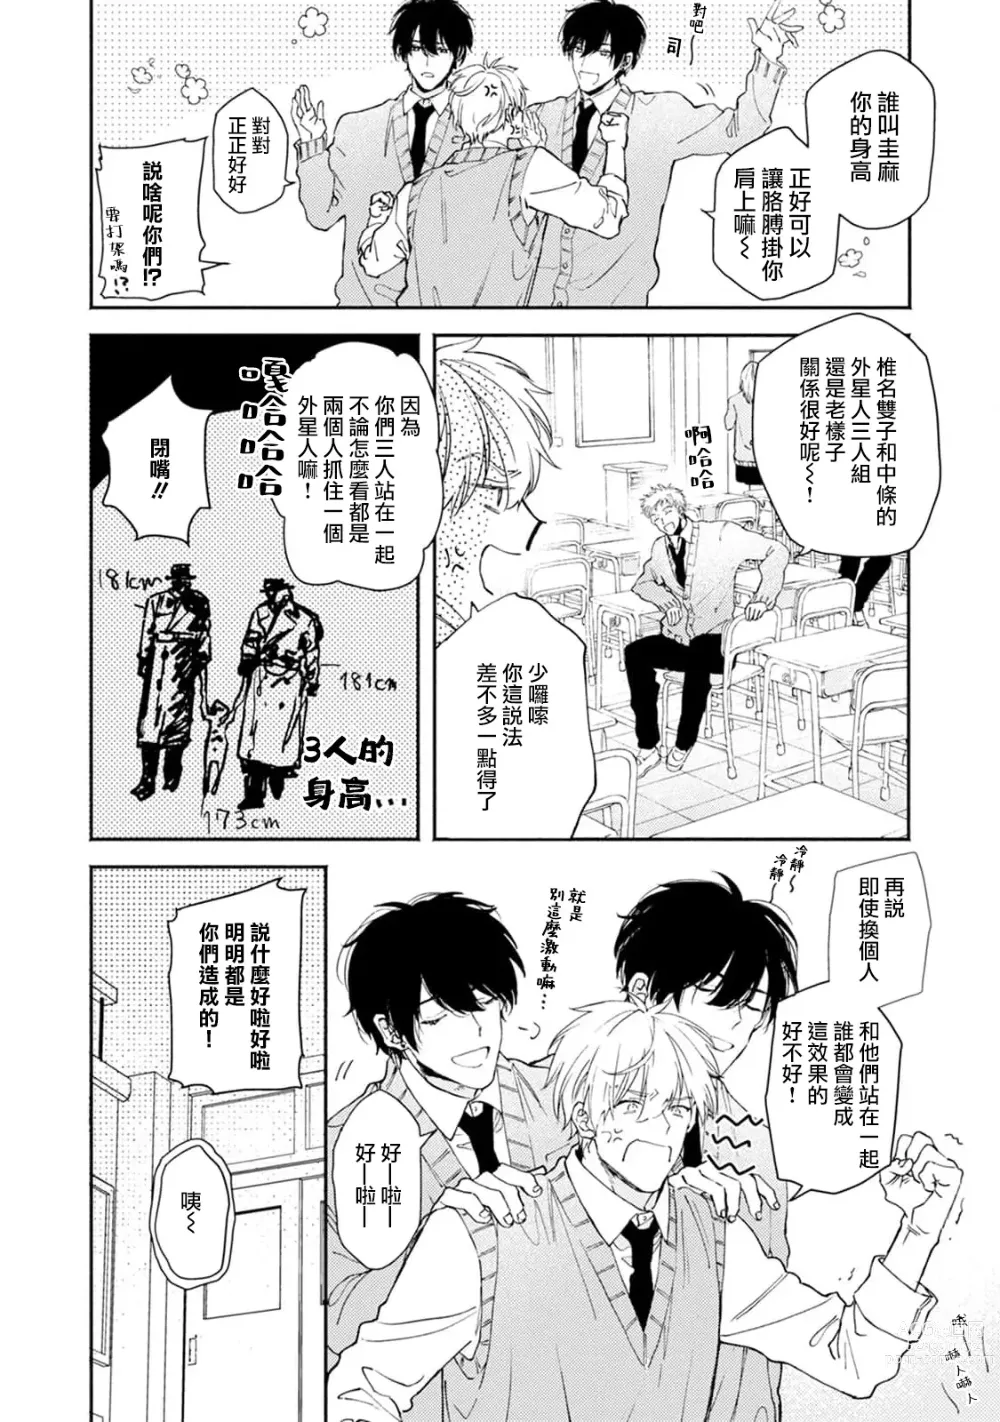 Page 5 of manga 你们都会好好爱我的对吧？1